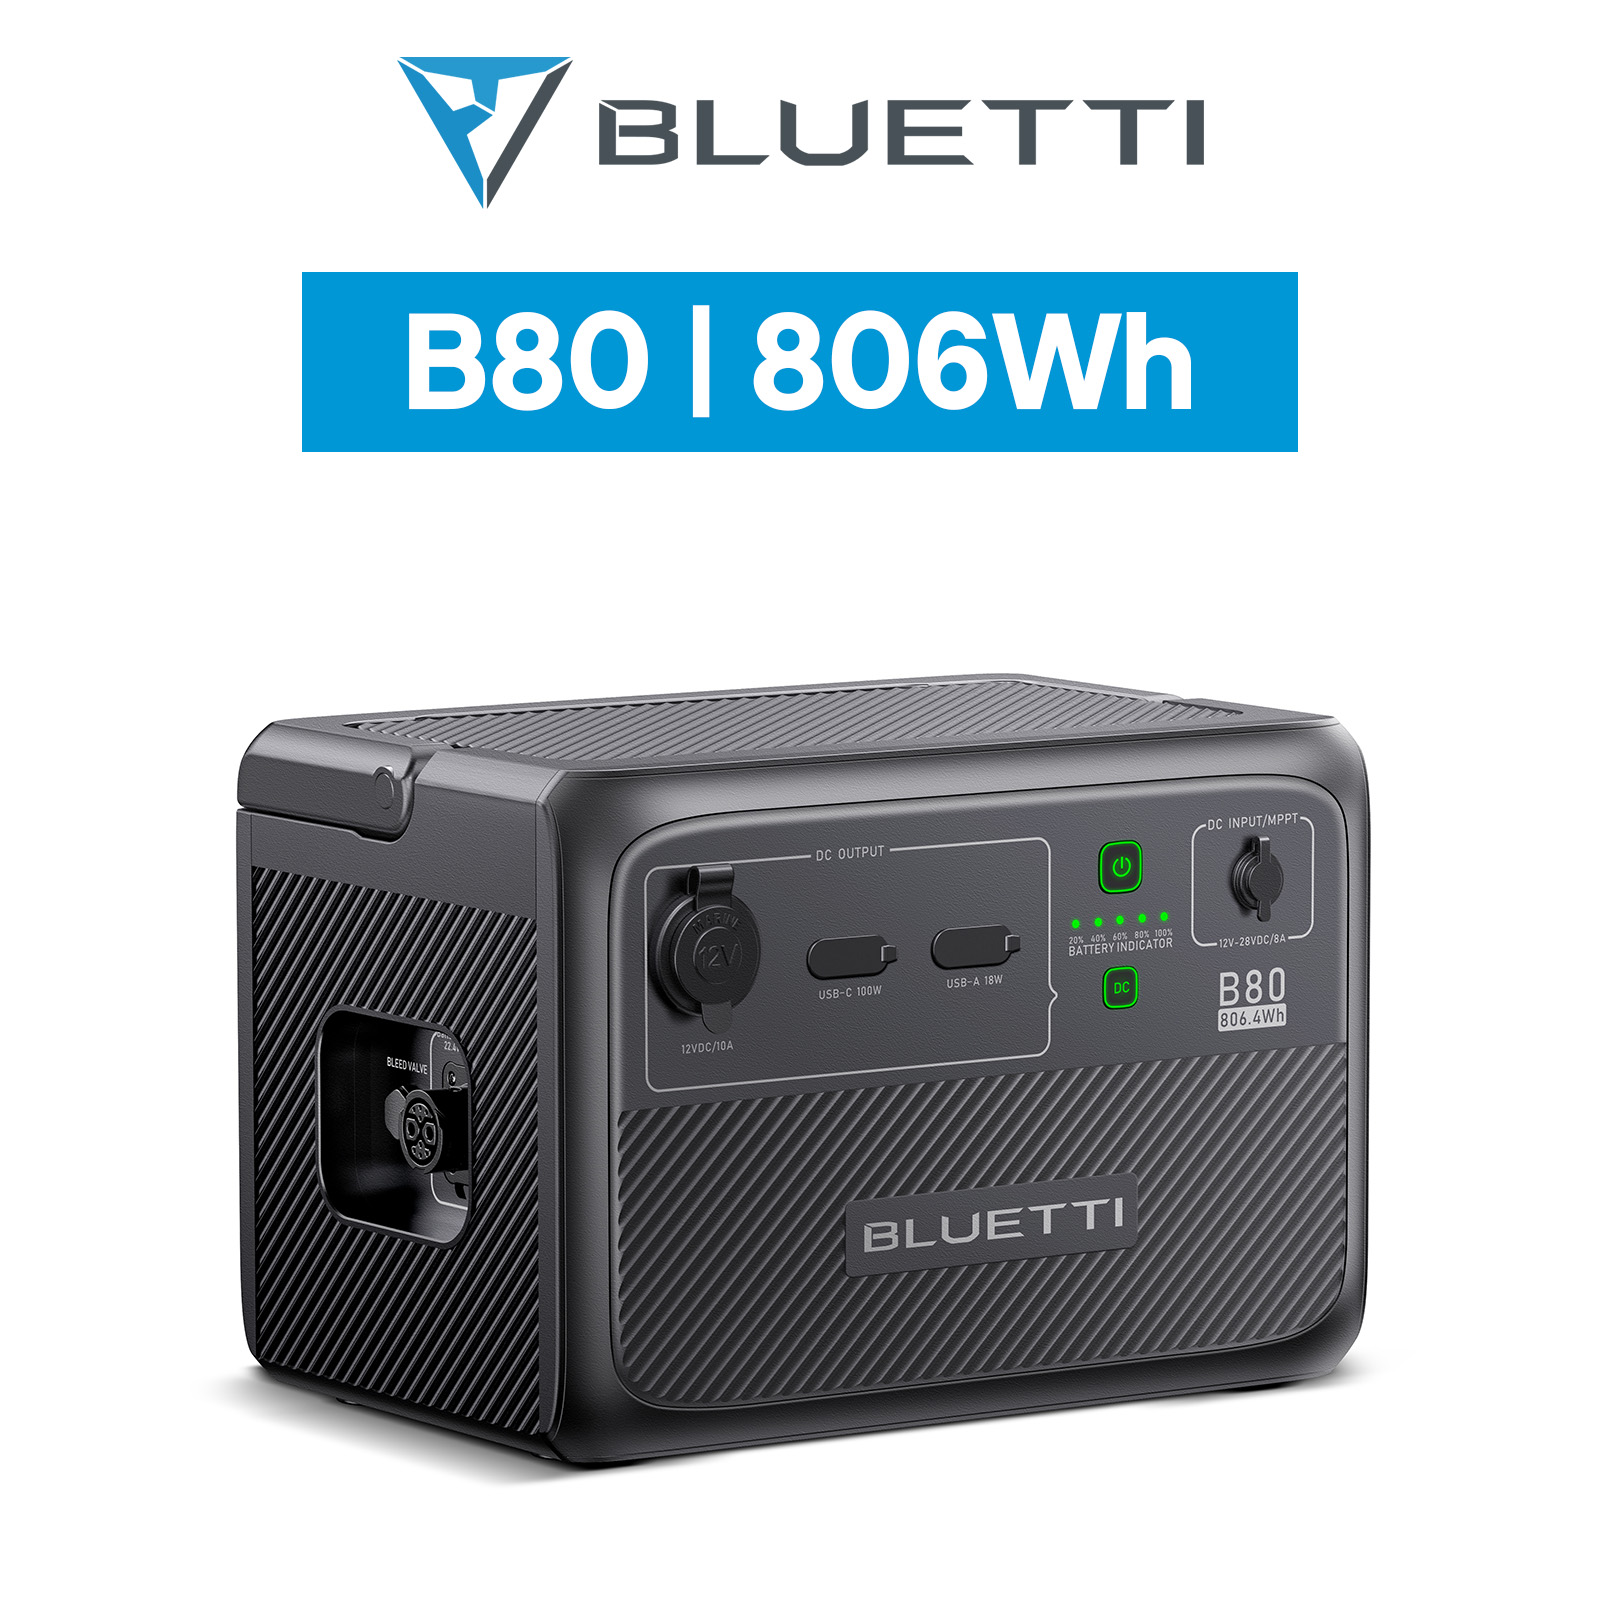 BLUETTI ポータブル電源 B80 拡張バッテリー 806Wh IP65防塵防水 6年 